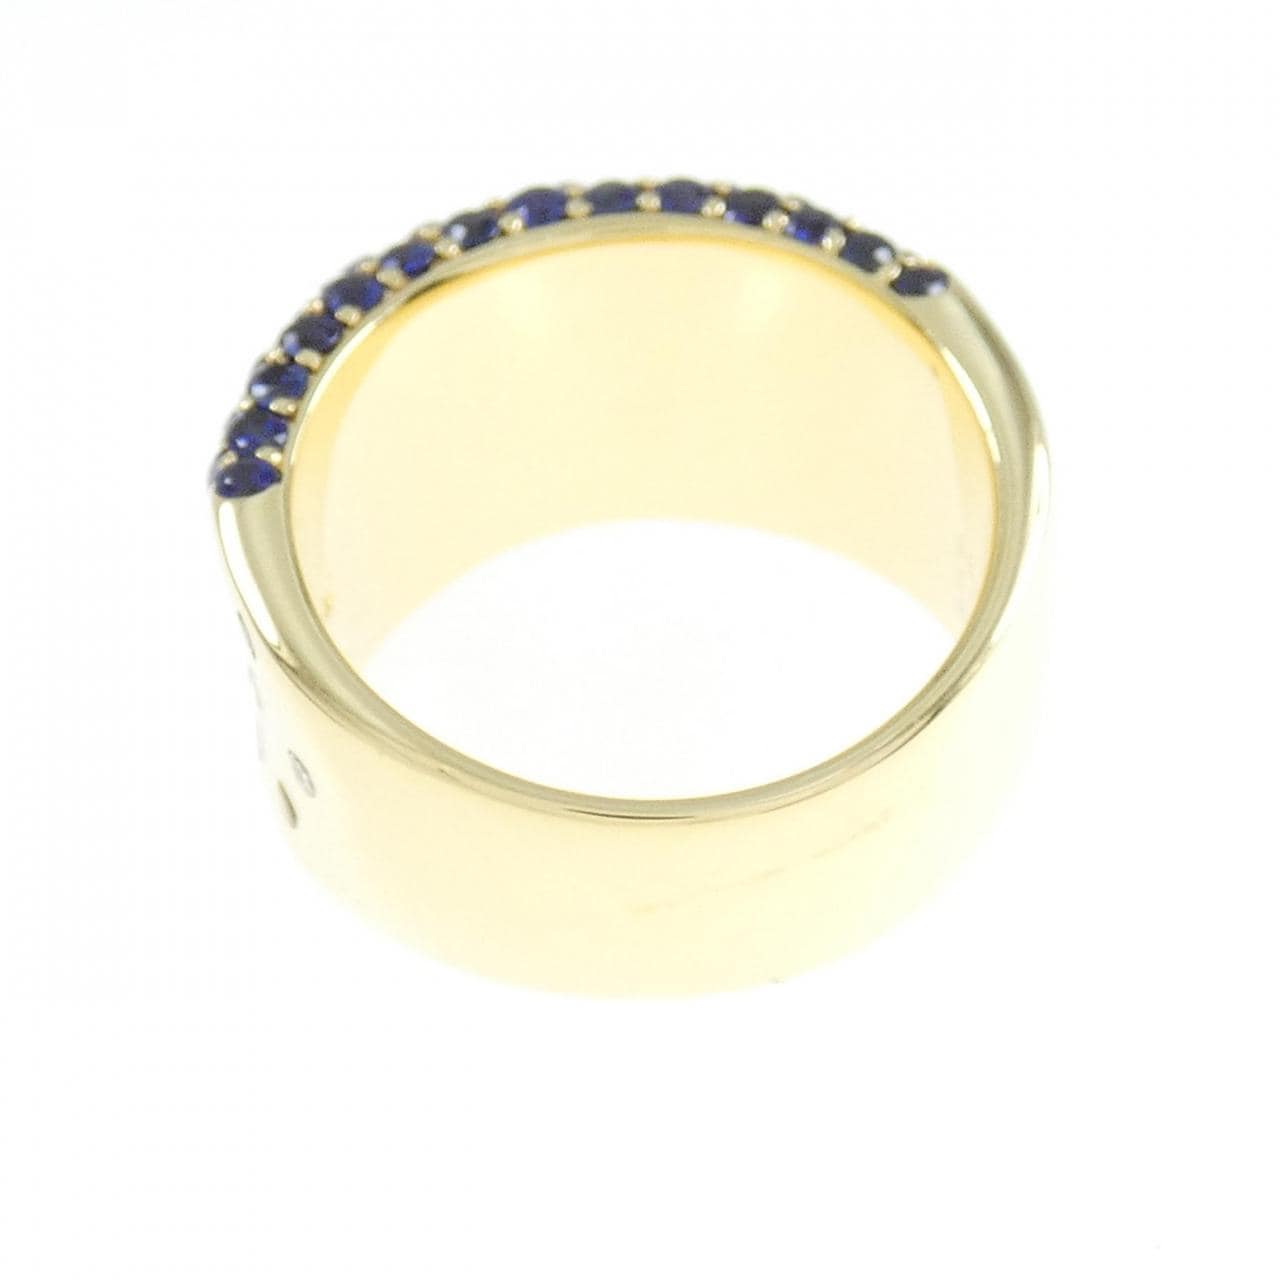 PONTE VECCHIO Sapphire Ring 2.55CT